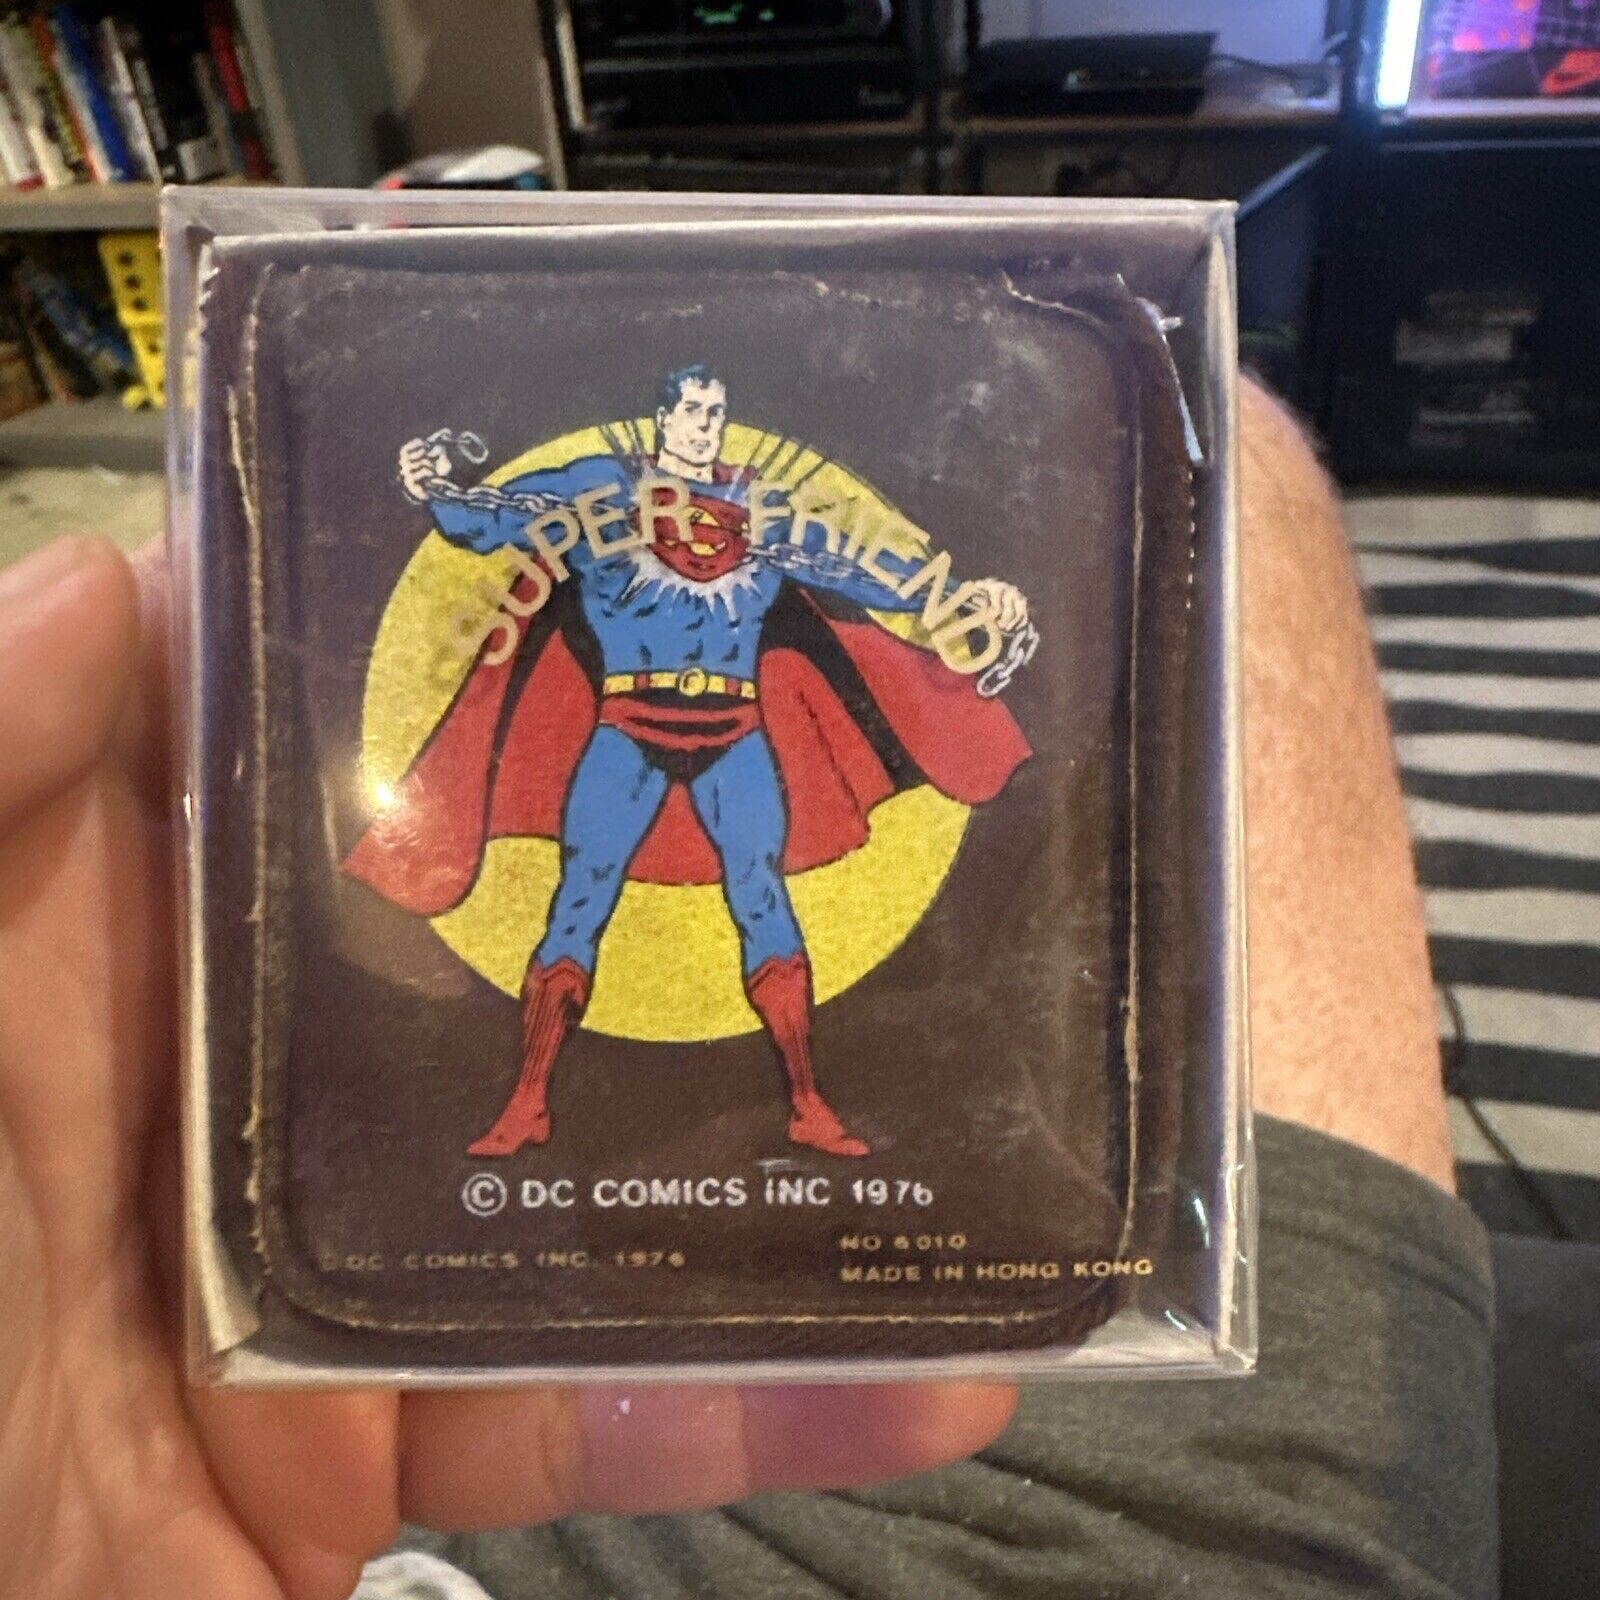 Vintage 1976 DC COMICS INC SUPERMAN WALLET PRISTINE CONDITION w/ ID CARD INSIDE